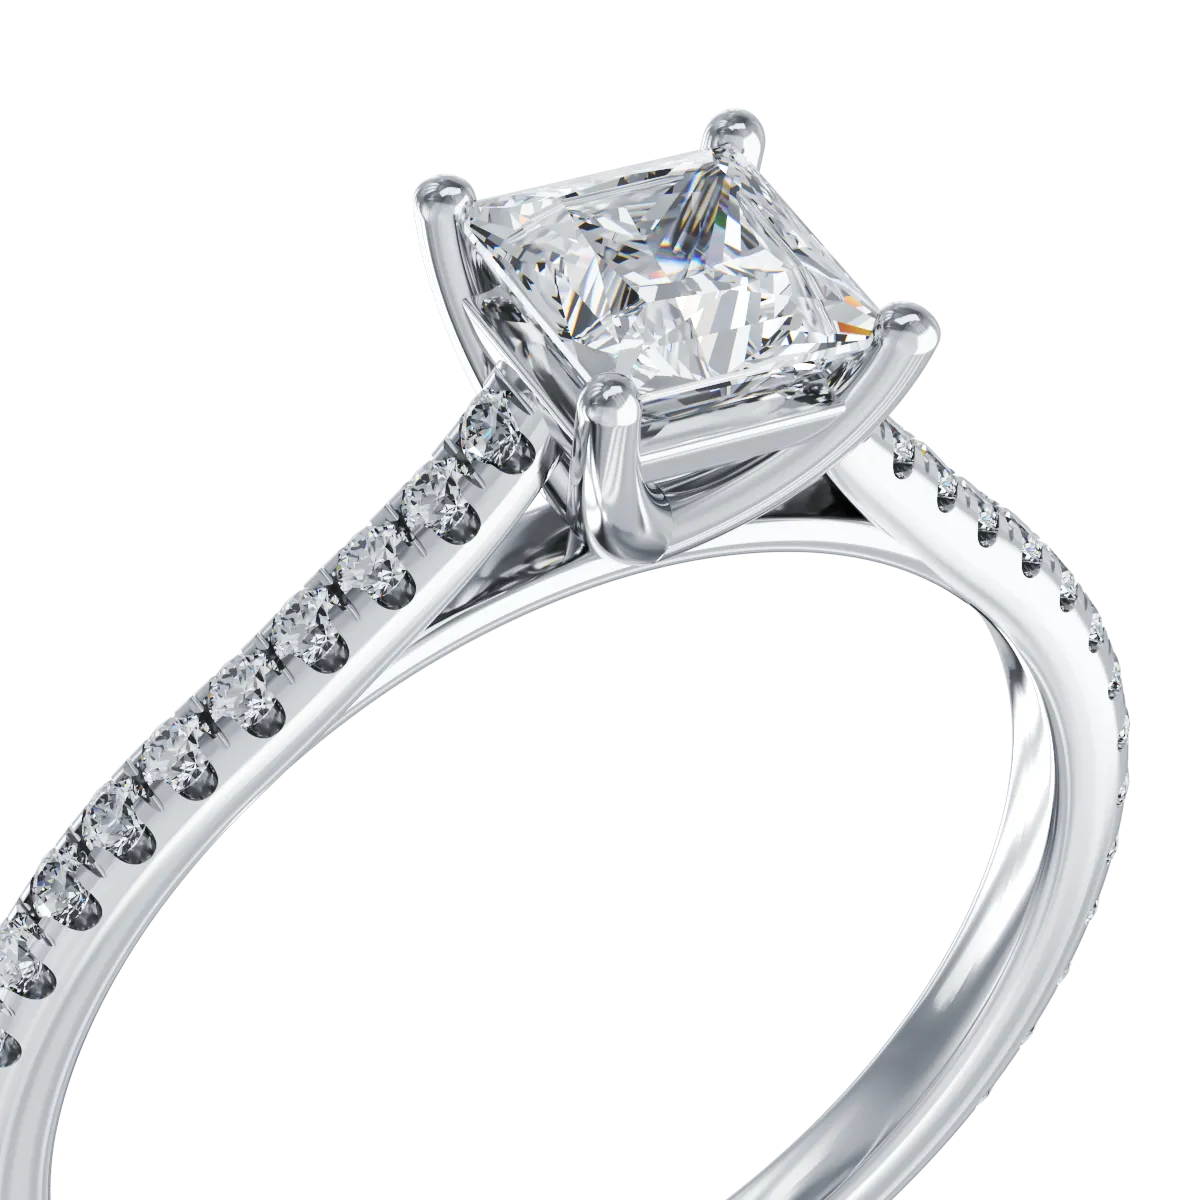 Platinum engagement ring with 0.62ct diamond and 0.18ct diamonds